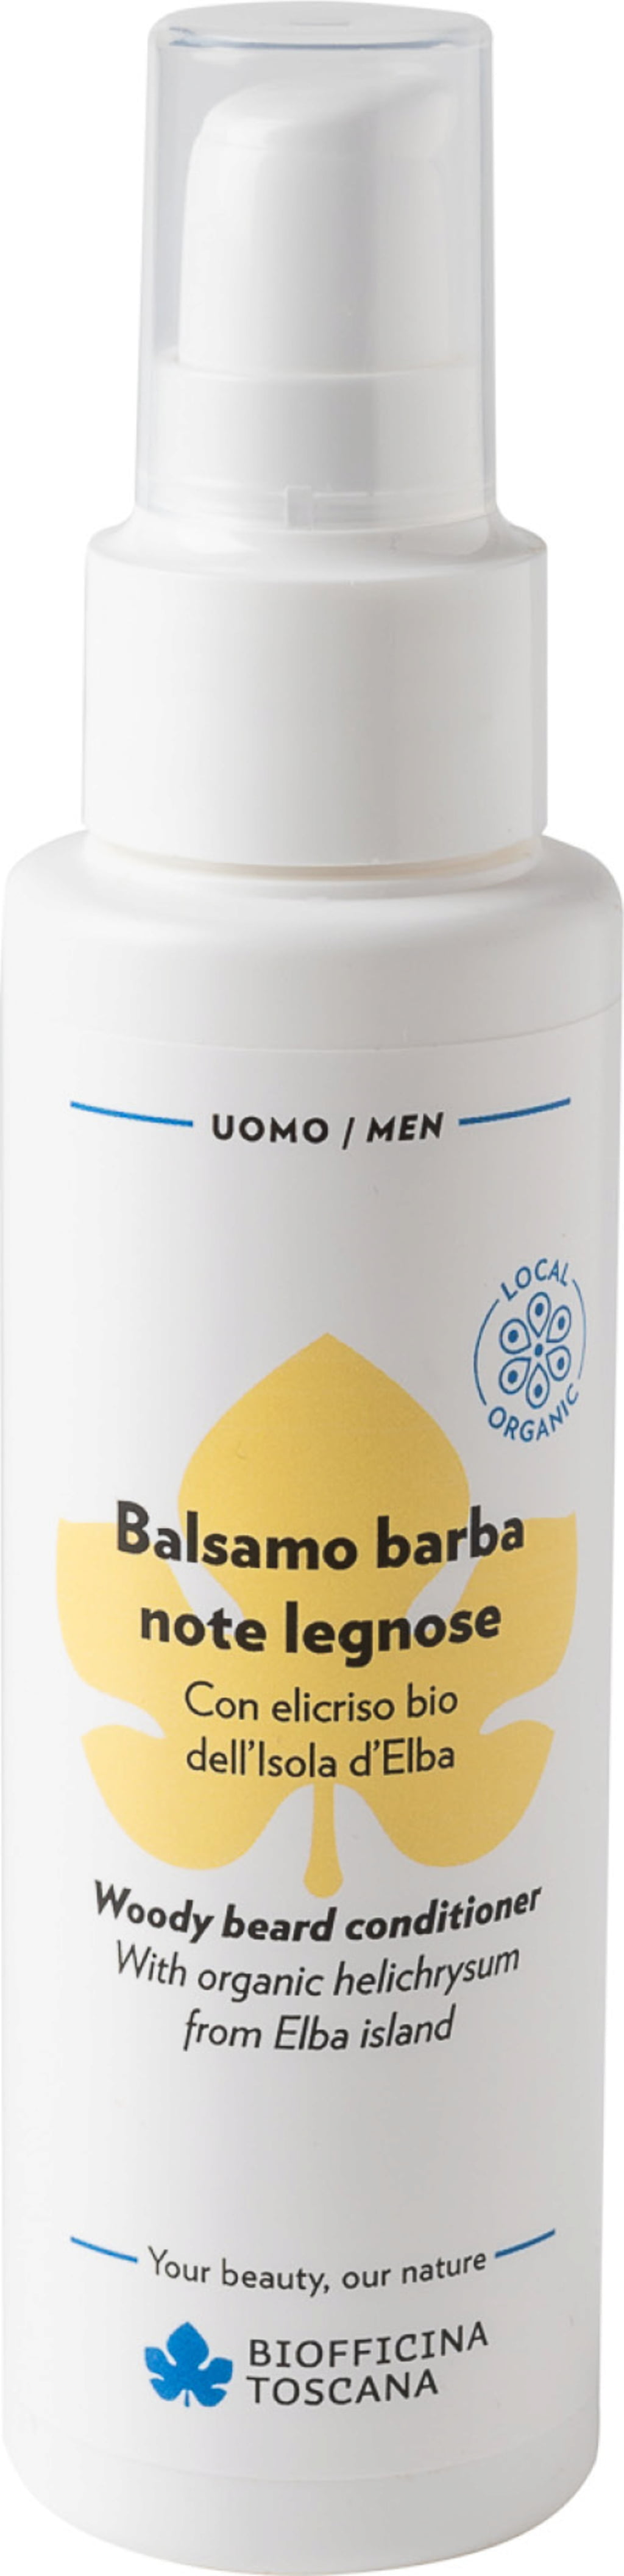 Biofficina Toscana Baume pour la Barbe "uomo" - Parfum boisé